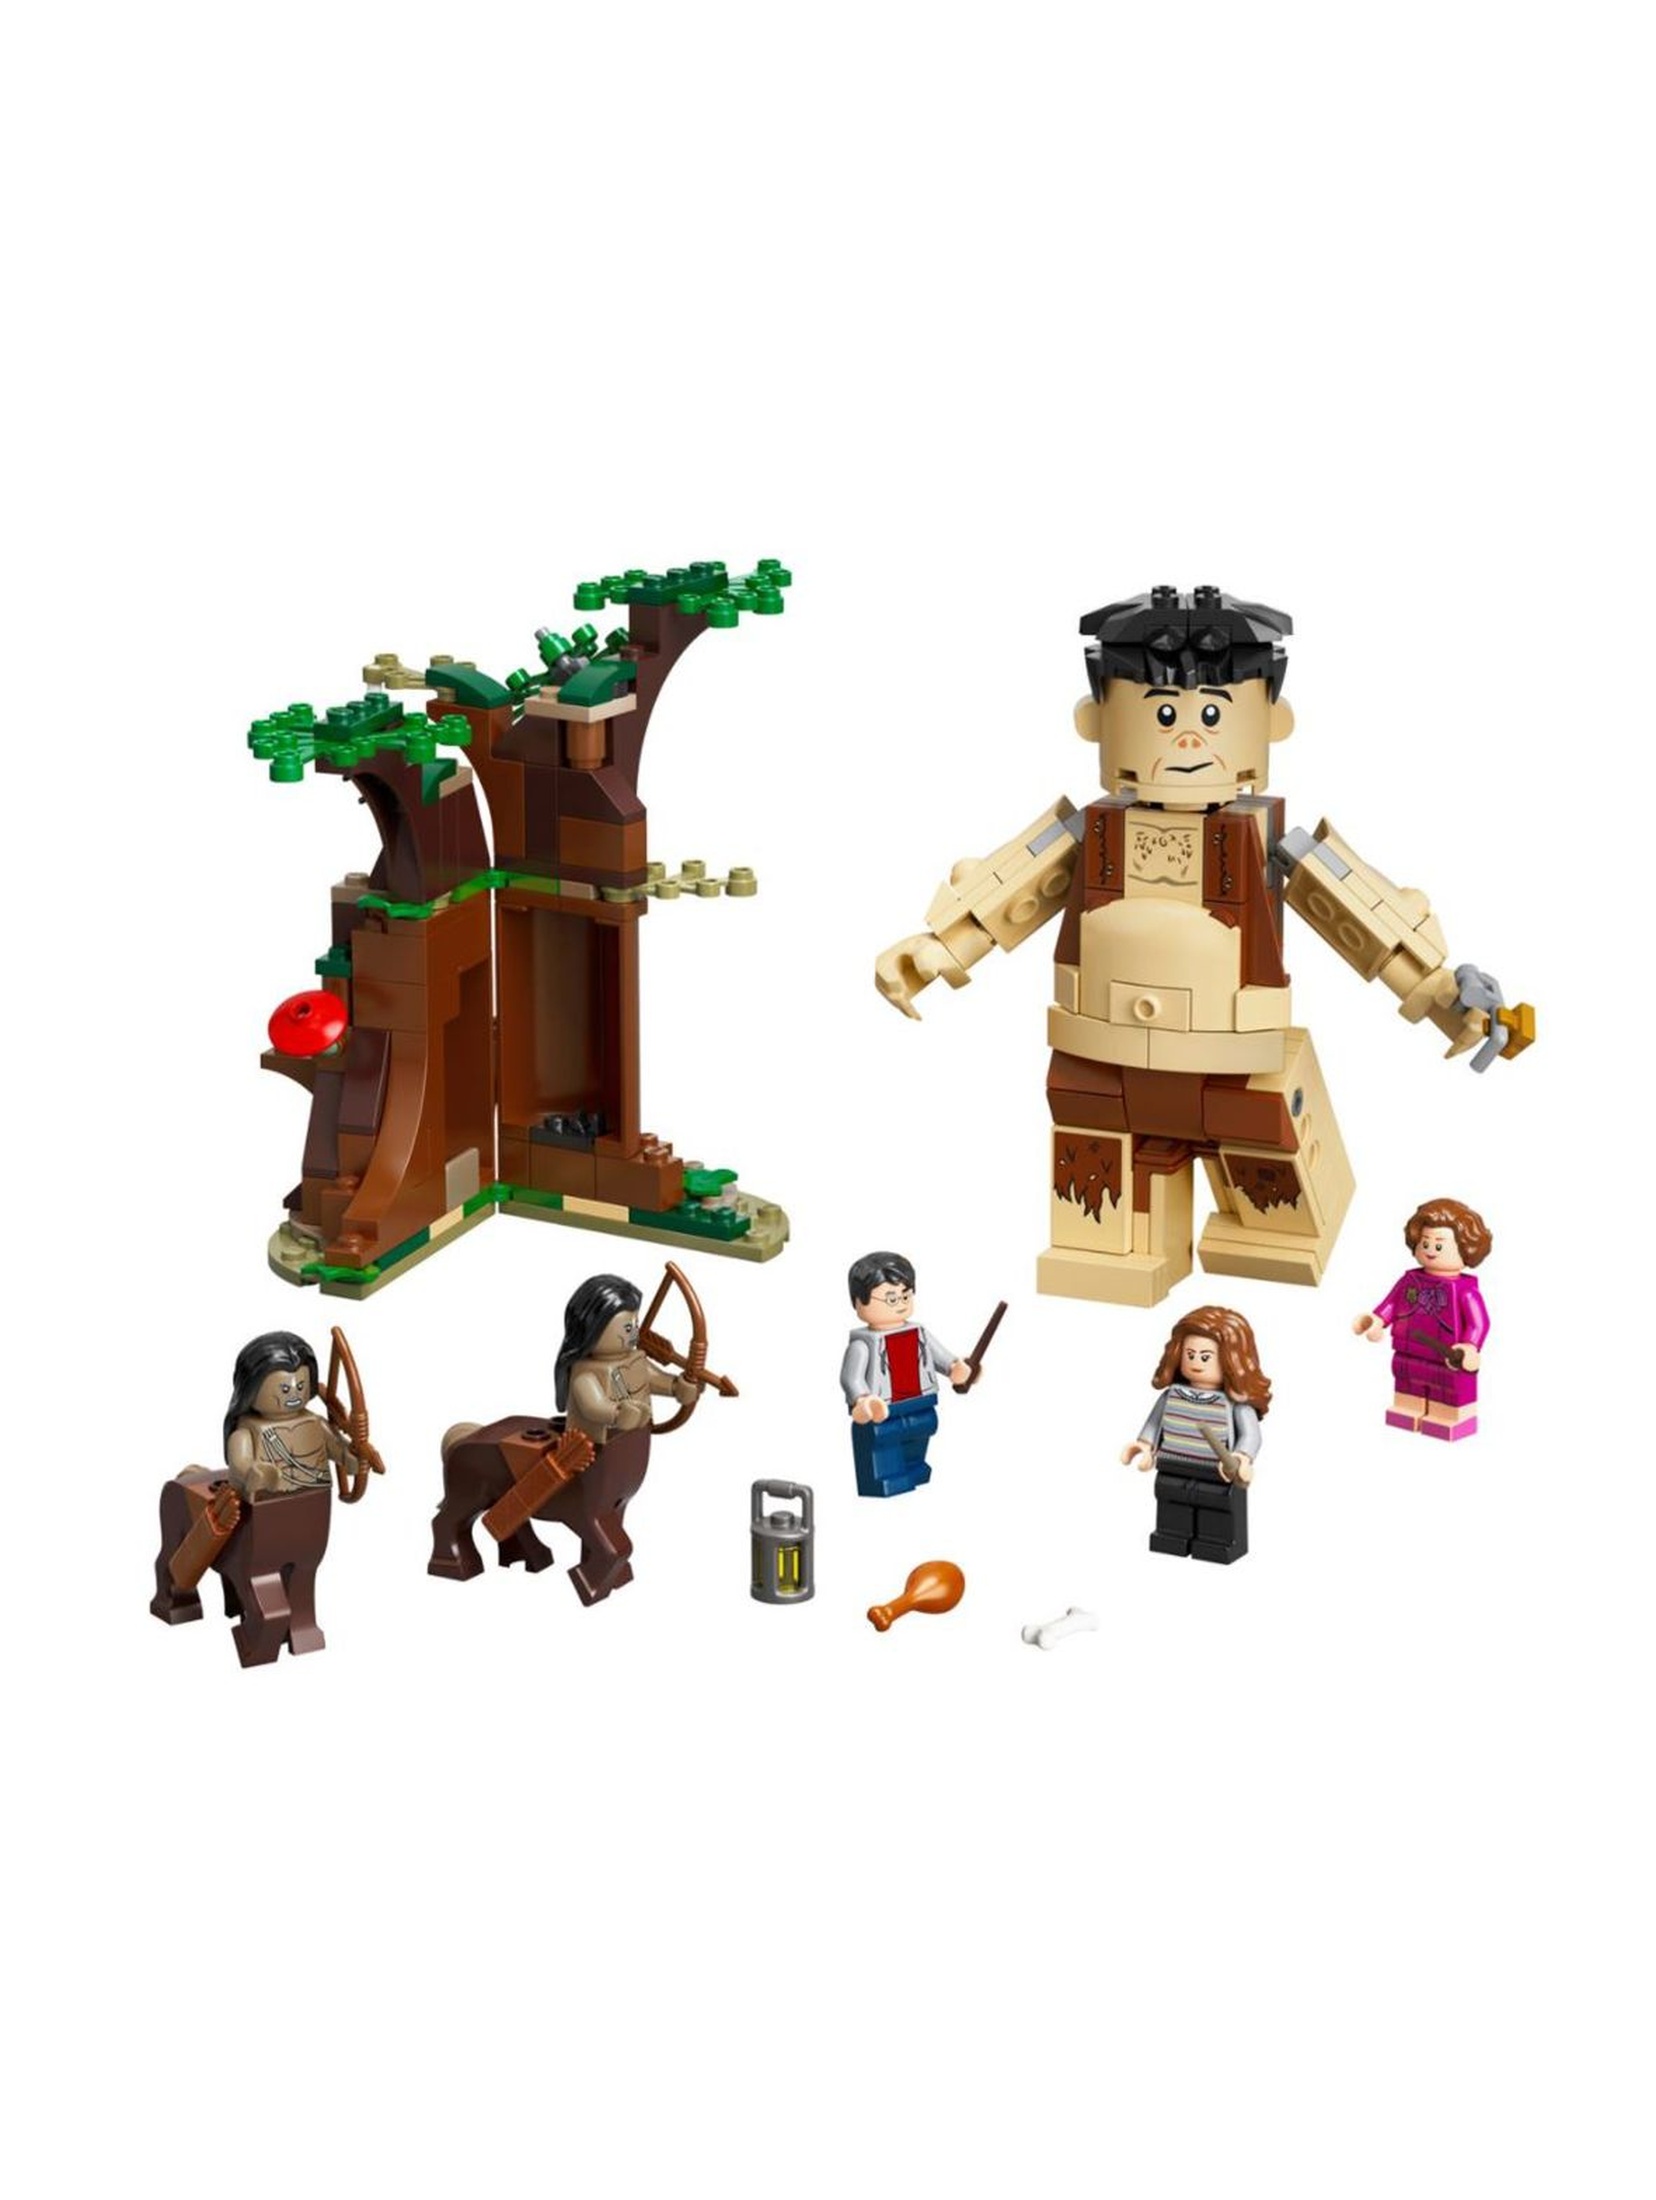 Lego Harry Potter - Zakazany Las: spotkanie Umbridge - 253 elementy wiek 8+